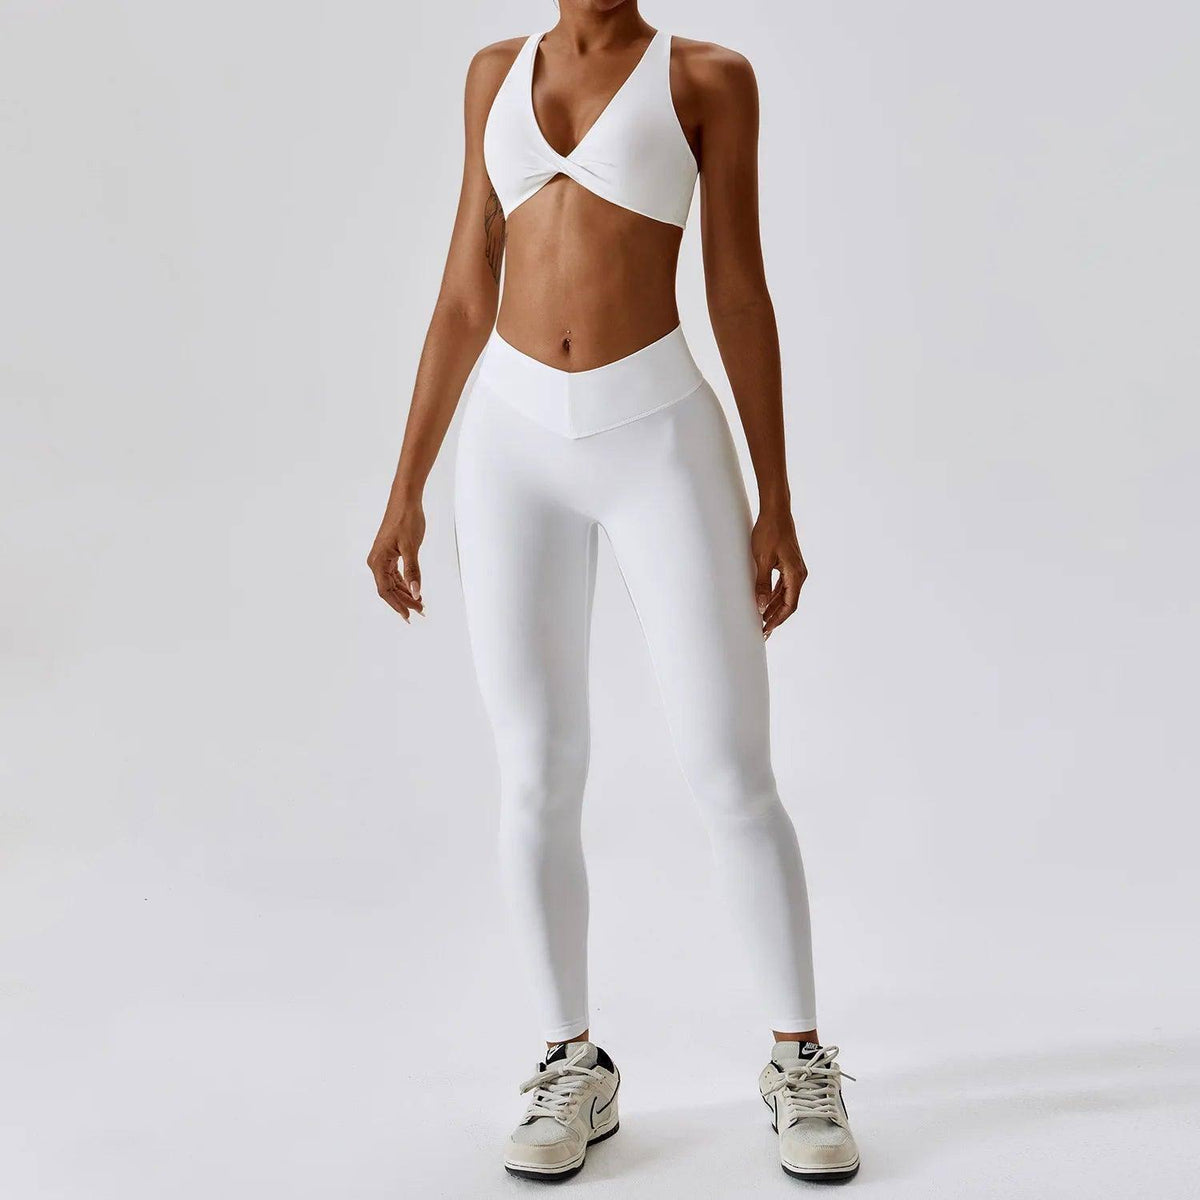 Women Yoga Clothing Sets Athletic Wear High Waist Leggings-Swan White-1-1